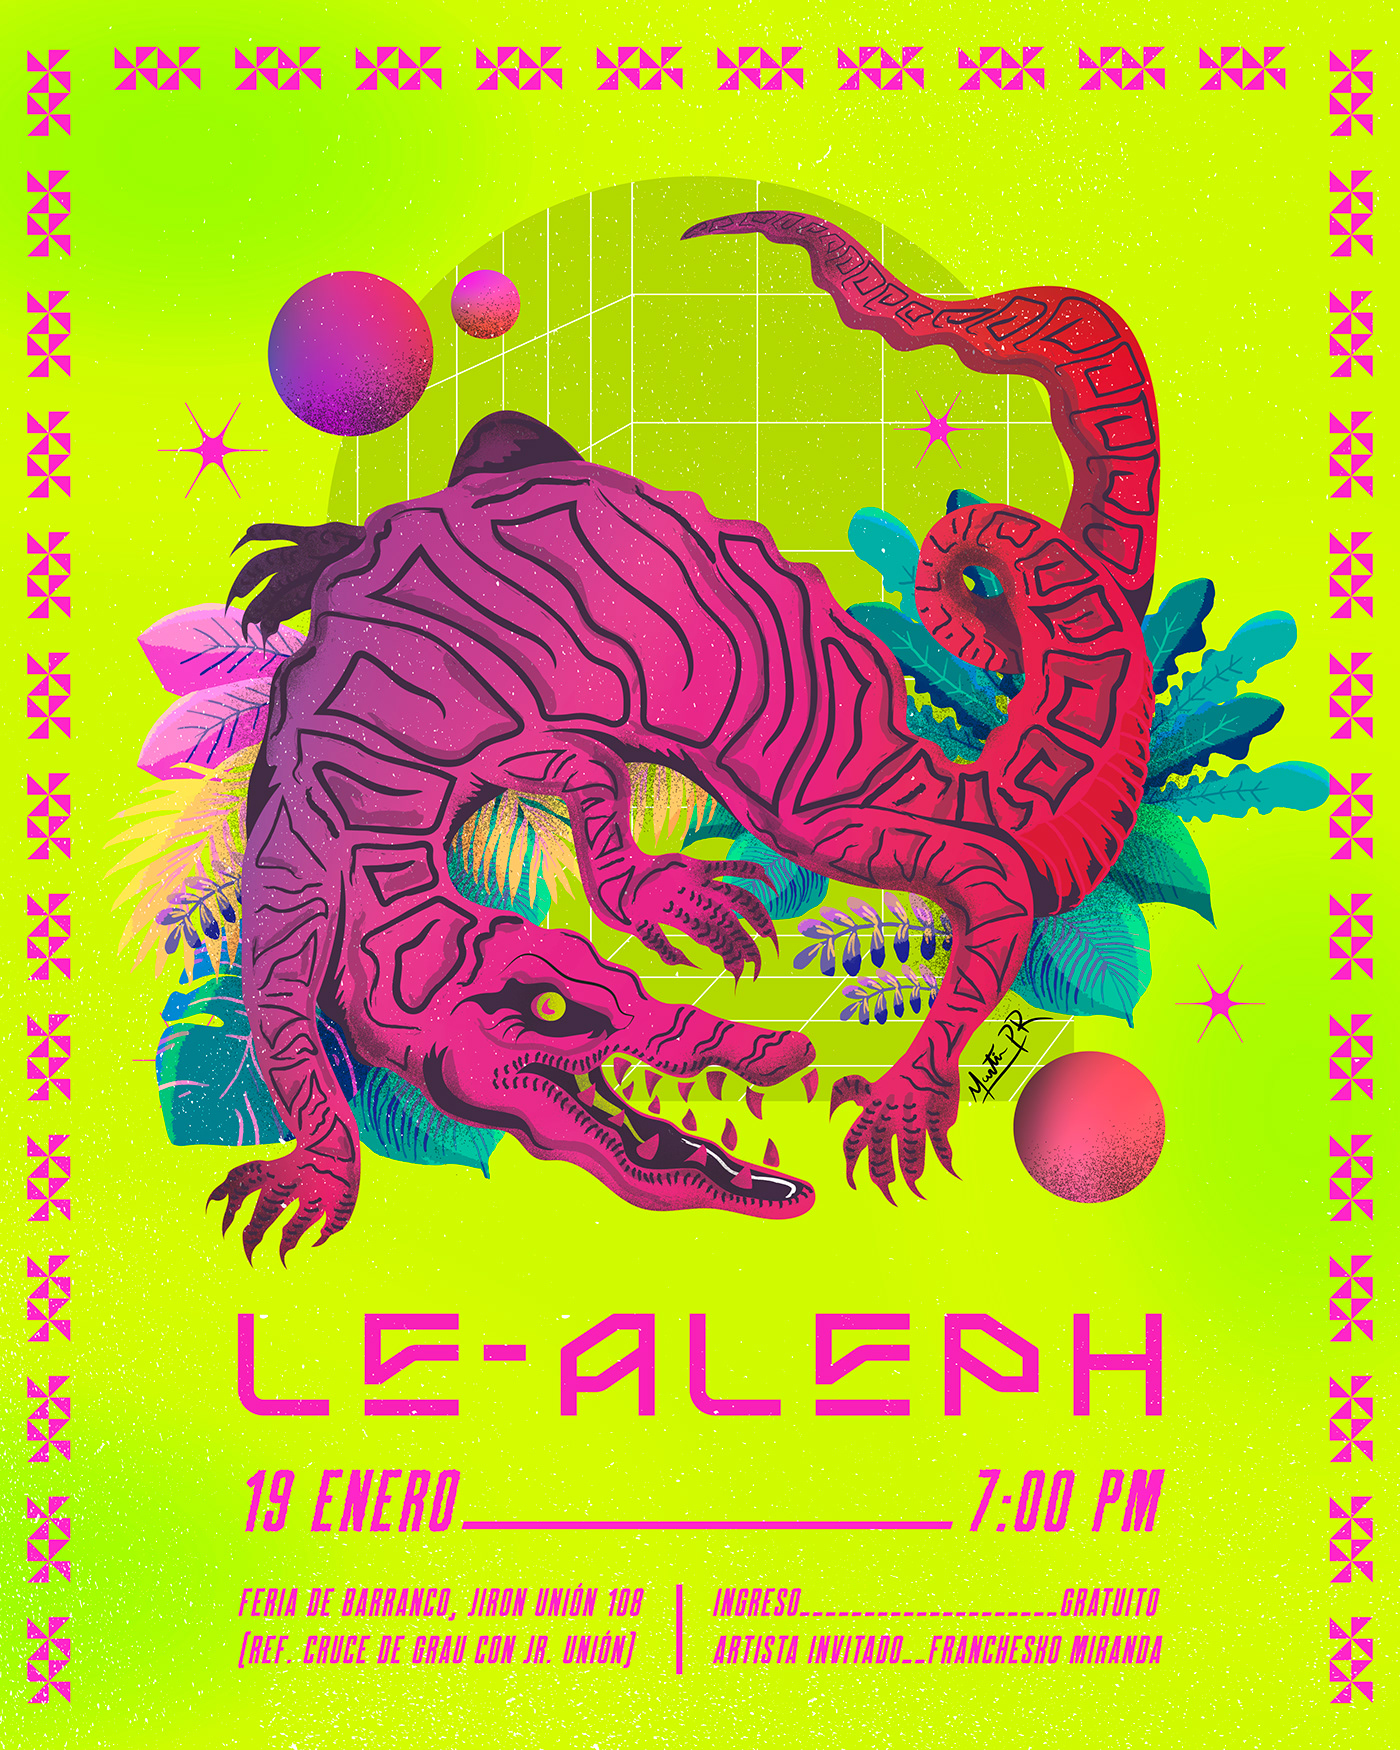 caiman digital illustration psychedelic art electronic music peru graphic design  Digital Art  artwork martinpr Tropical Design